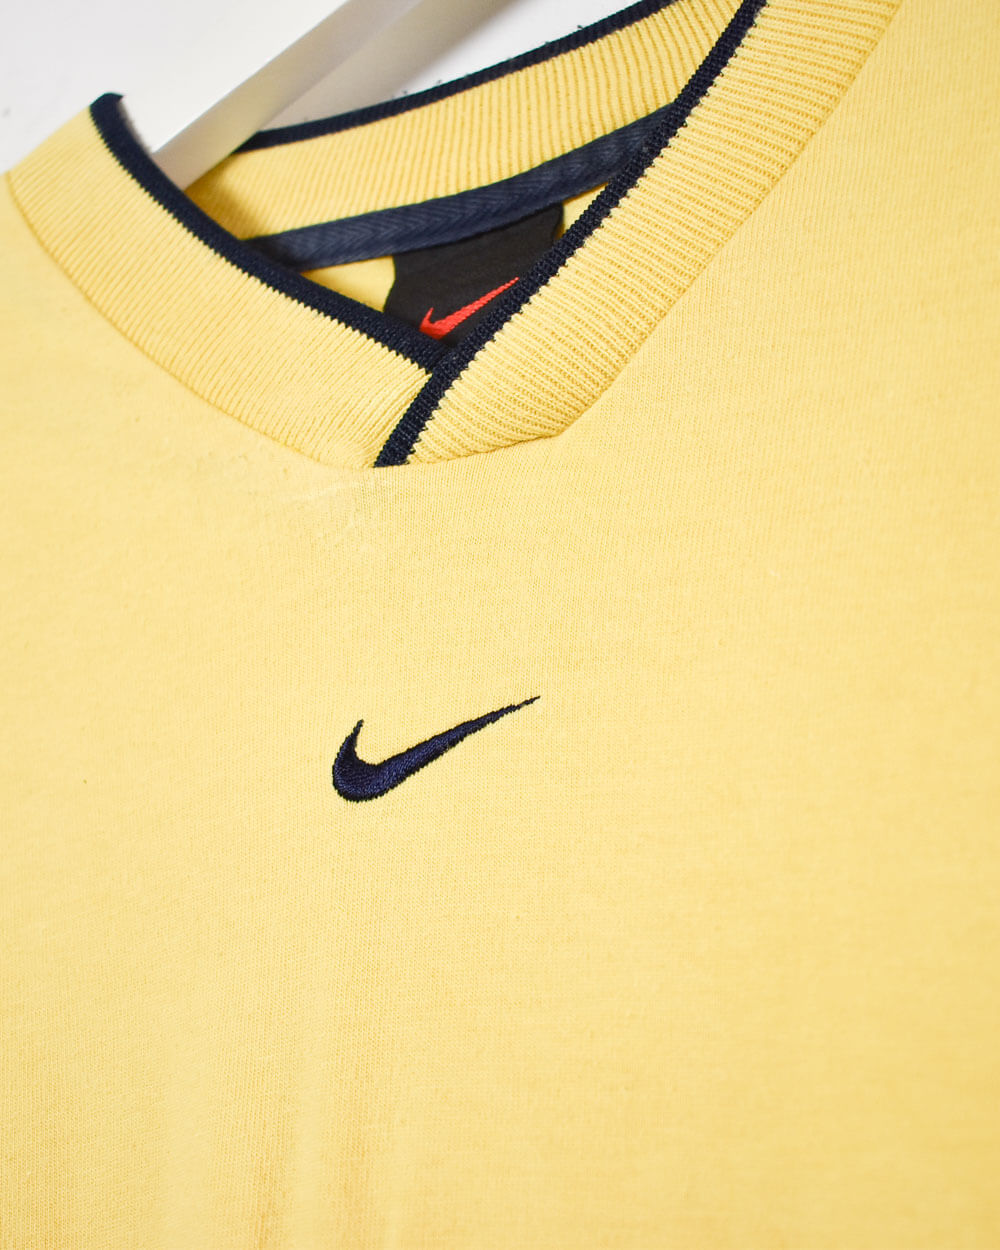 Yellow Nike T-Shirt - Large